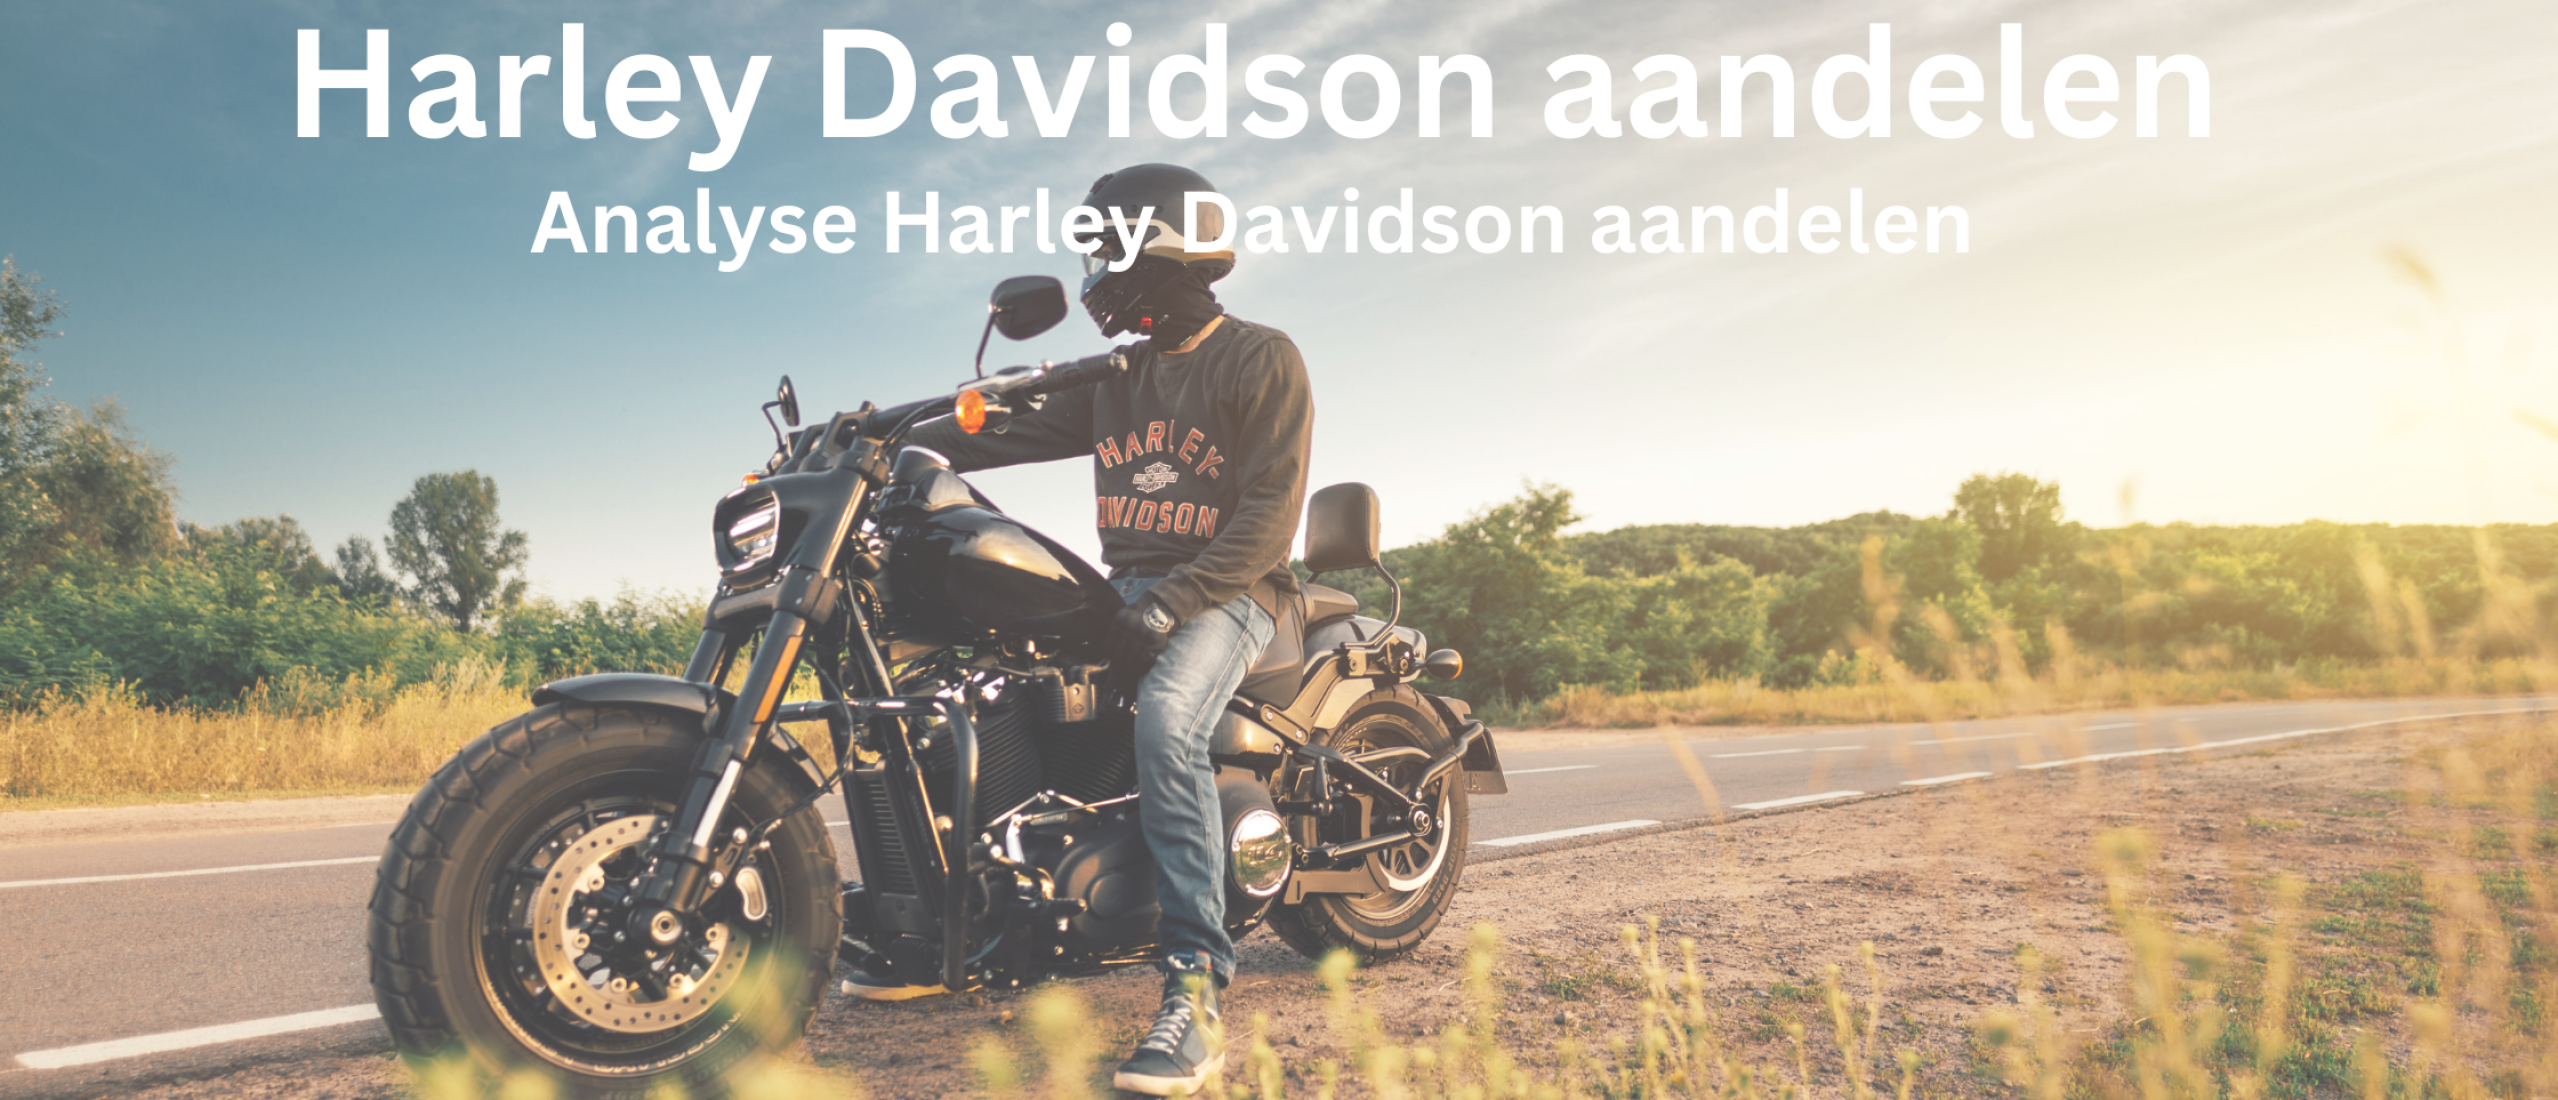 aandelen-harley-davidson-1